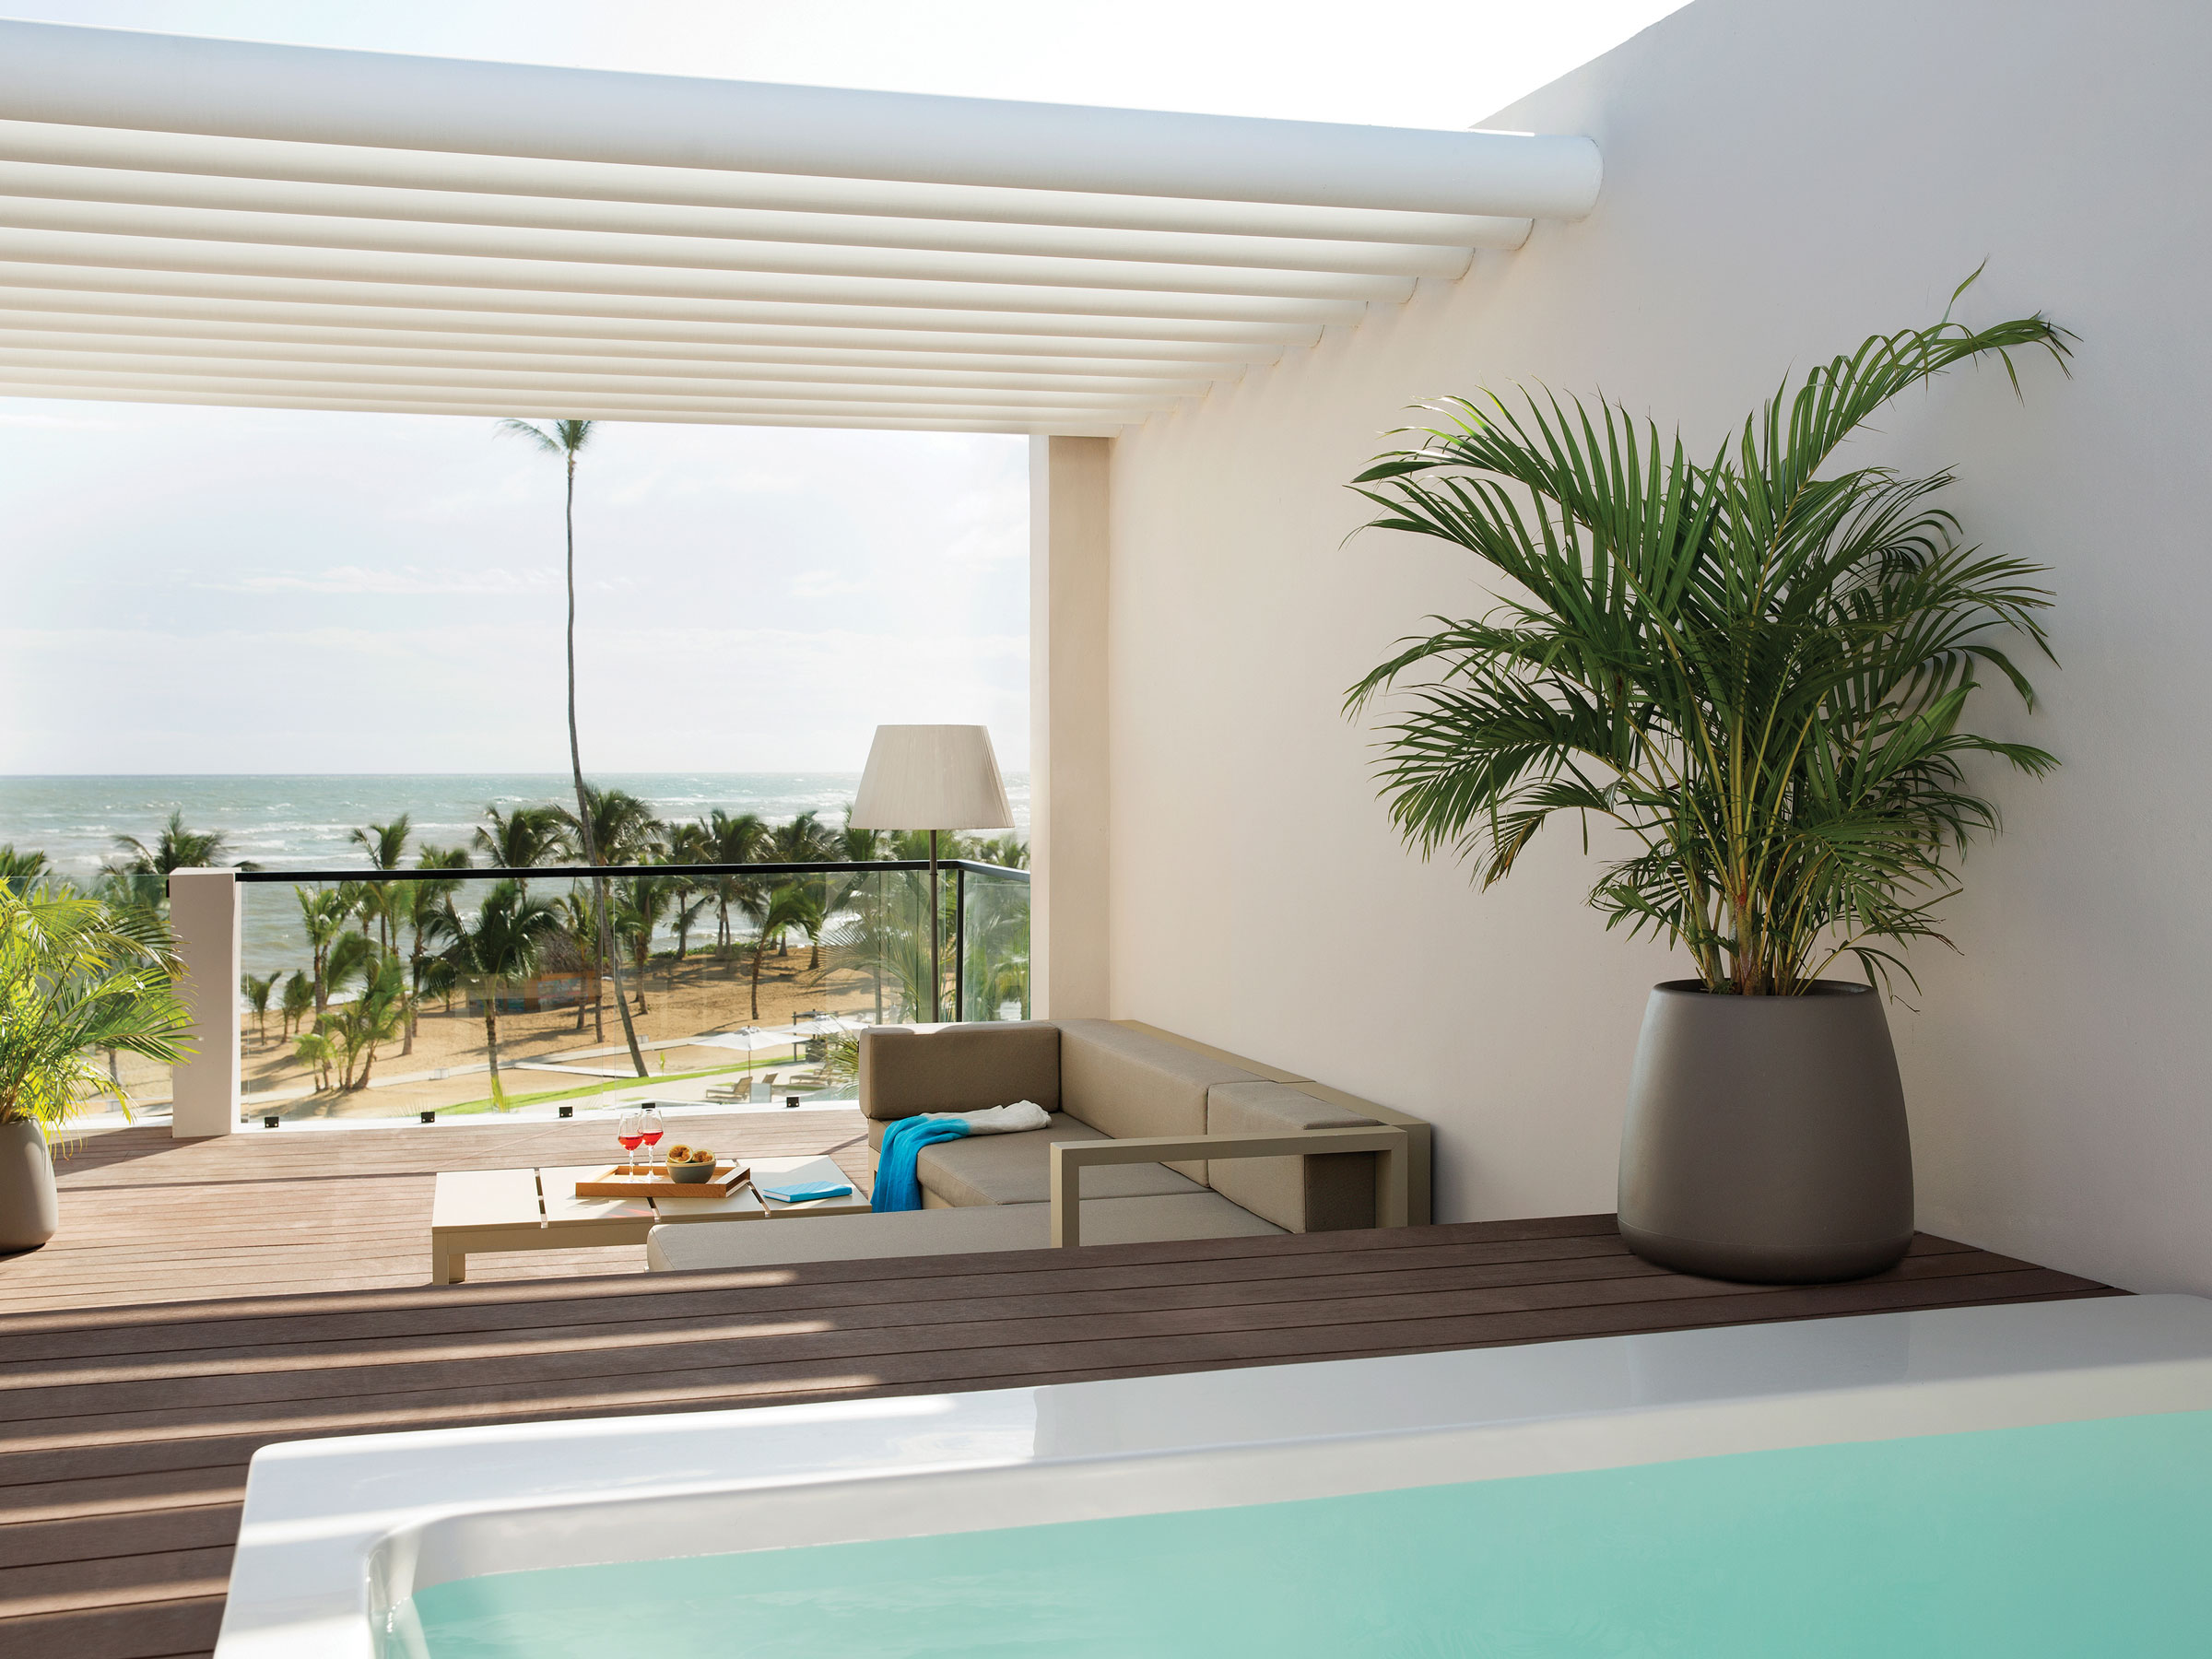 Ocean View Rooftop Terrace in Punta Cana